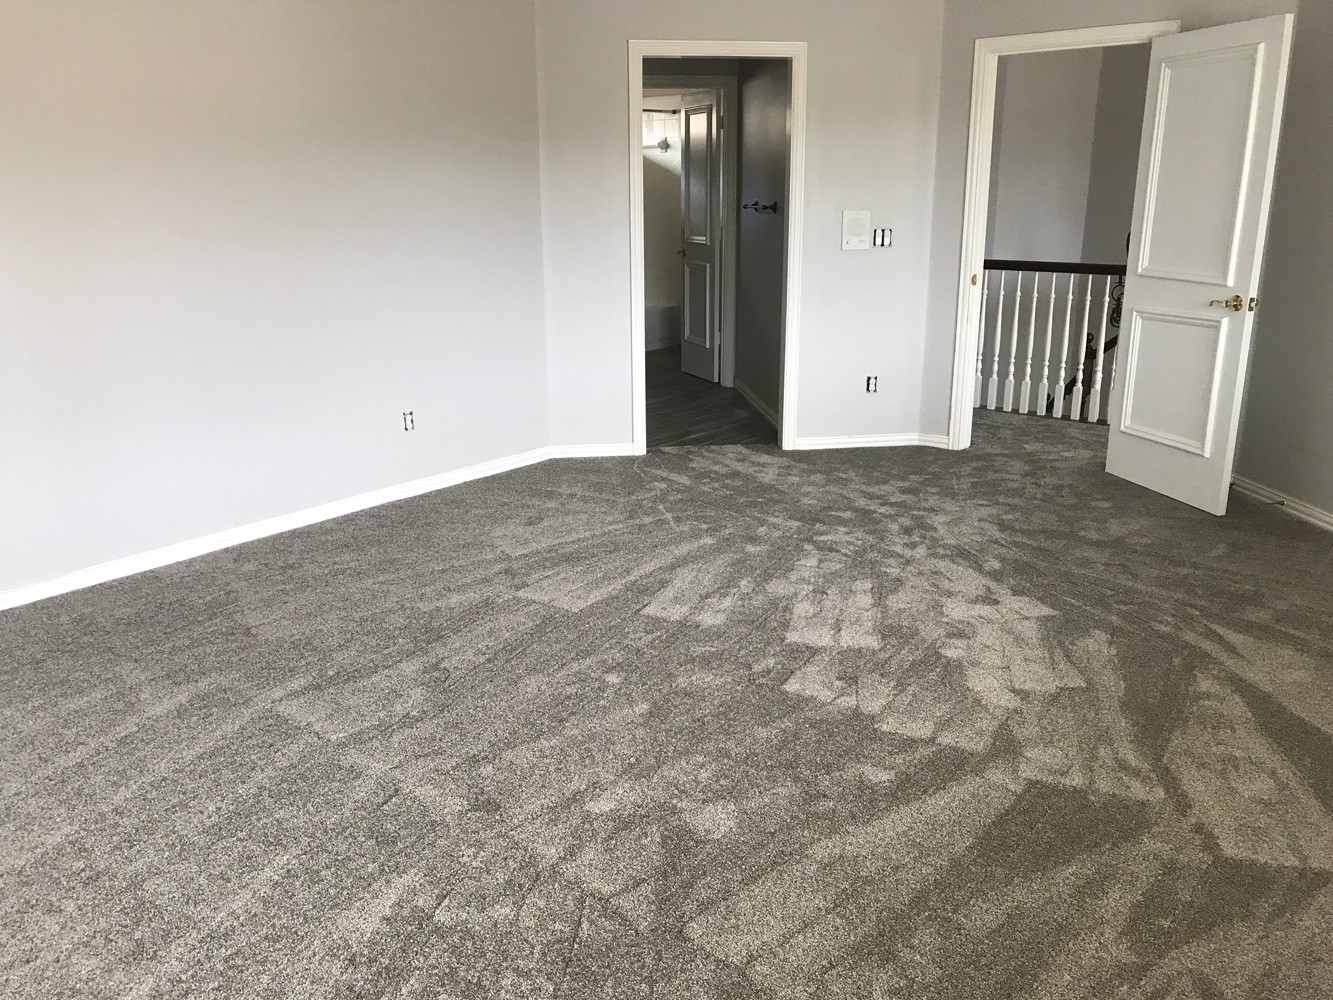 New carpet, tile & paint in Plano, TX GC Flooring Pros